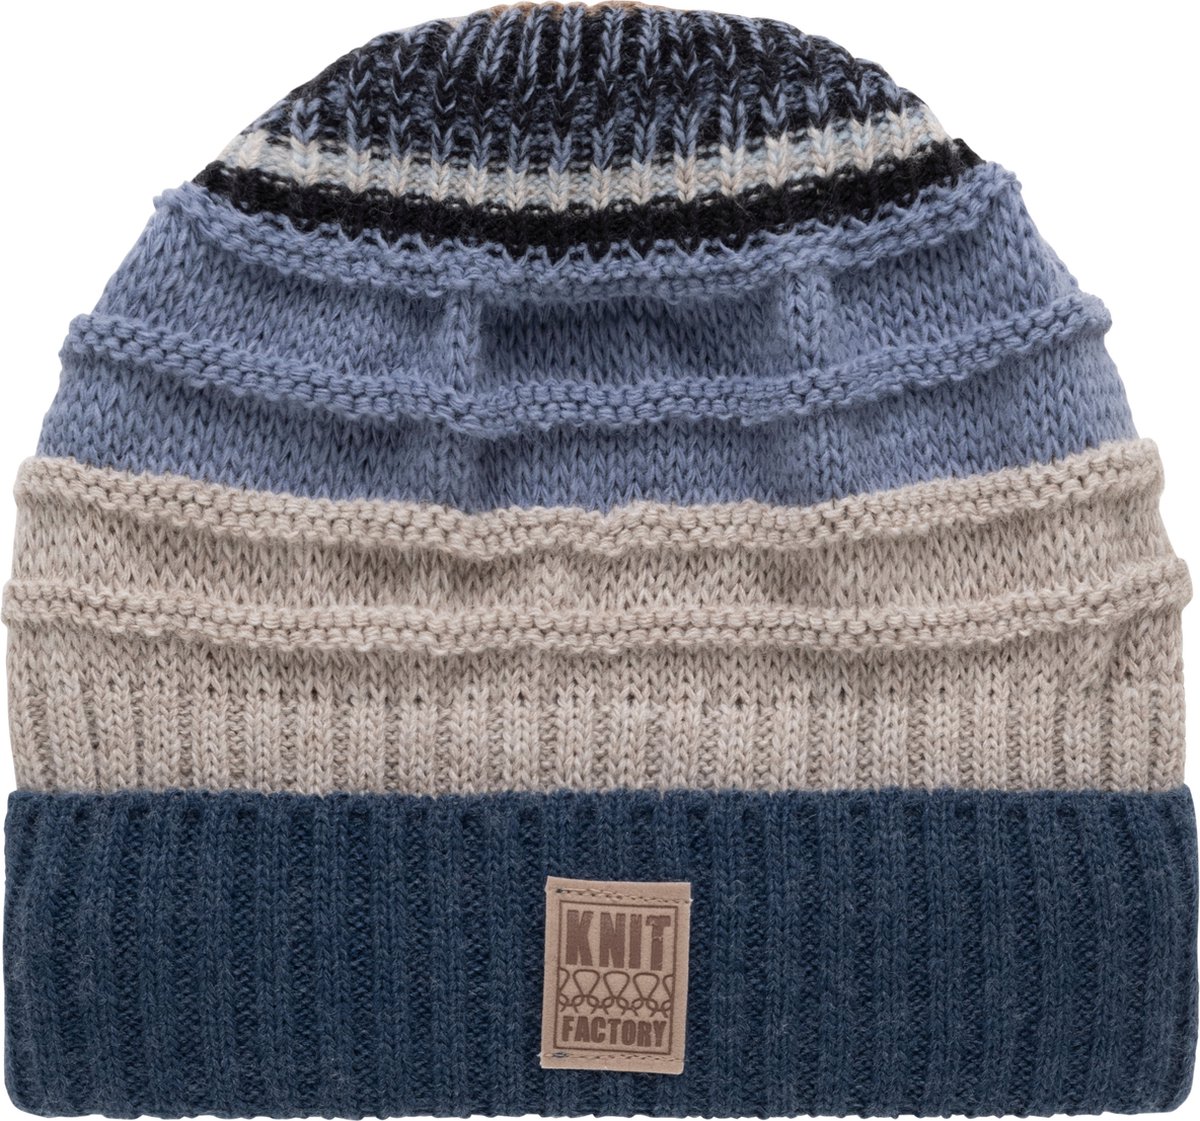 Knit Factory Dali Gebreide Muts Heren & Dames - Beanie hat - Blauw - Grofgebreid - Multicolor - Warme Wintermuts met blauwtinten - Unisex - One Size